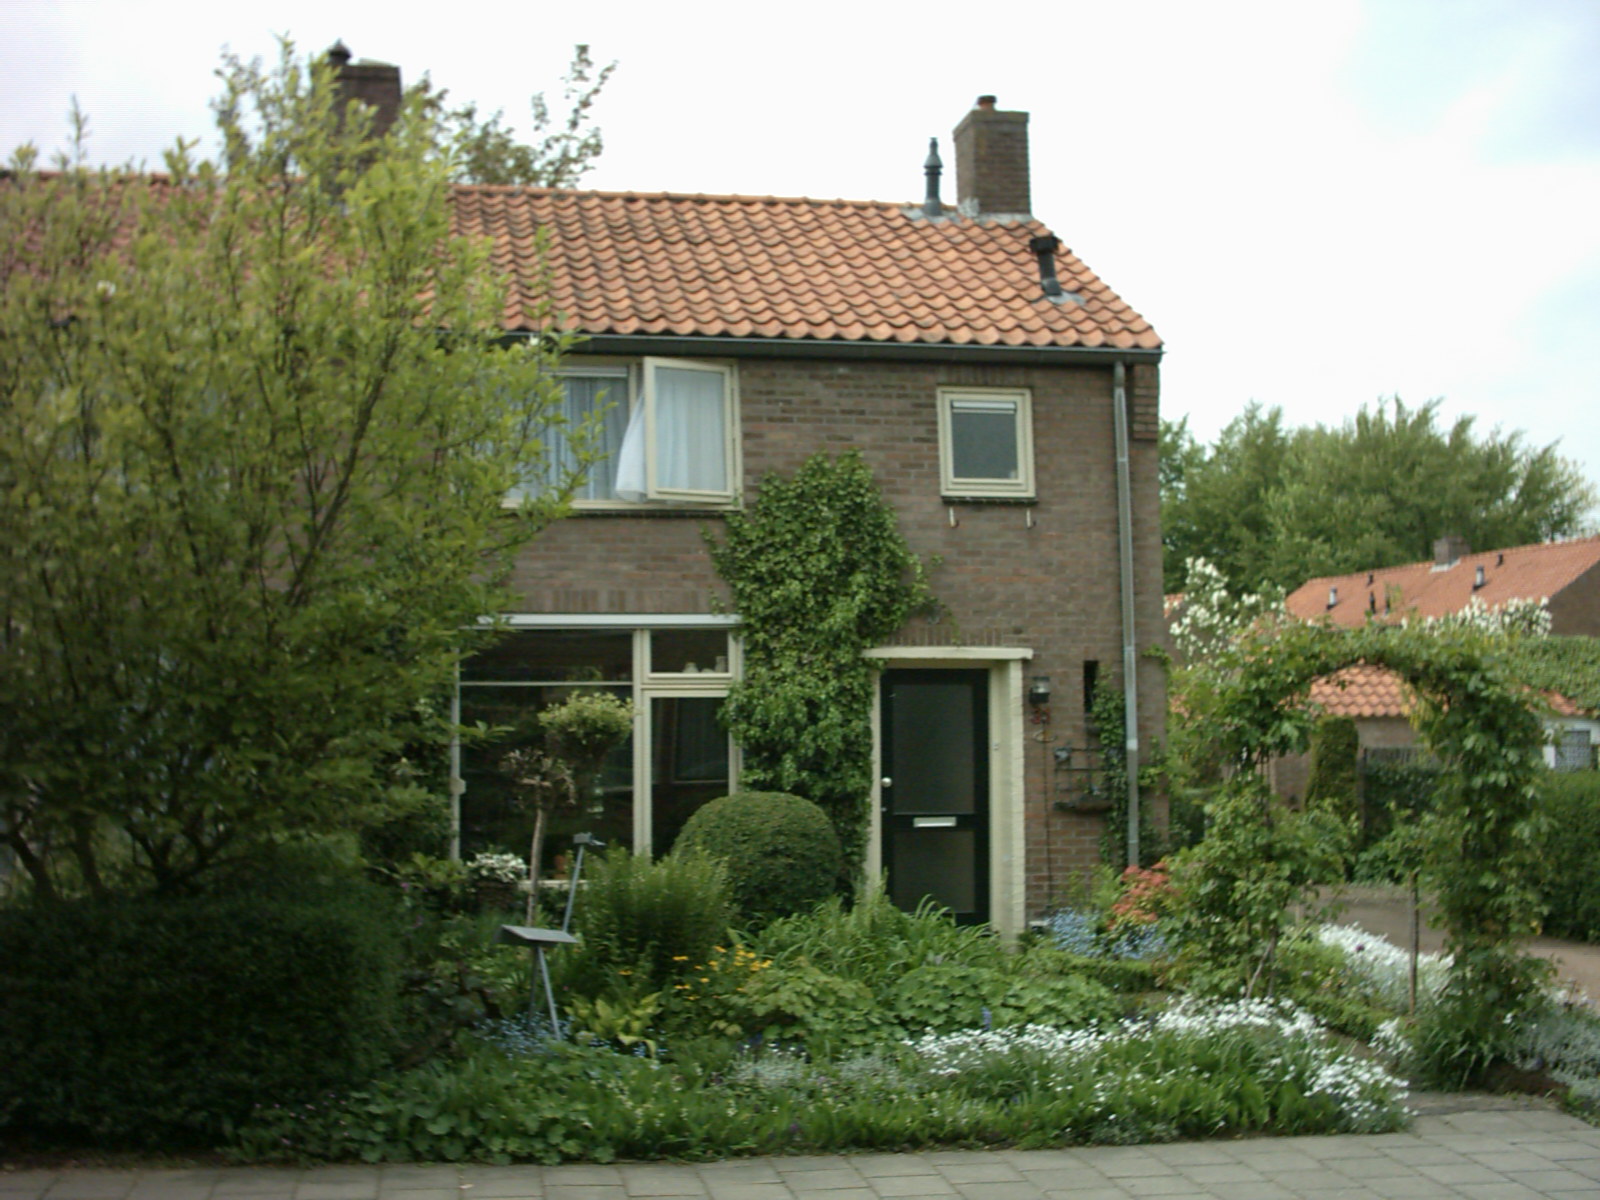 Nijverheidsstraat 31, 7213 DA Gorssel, Nederland